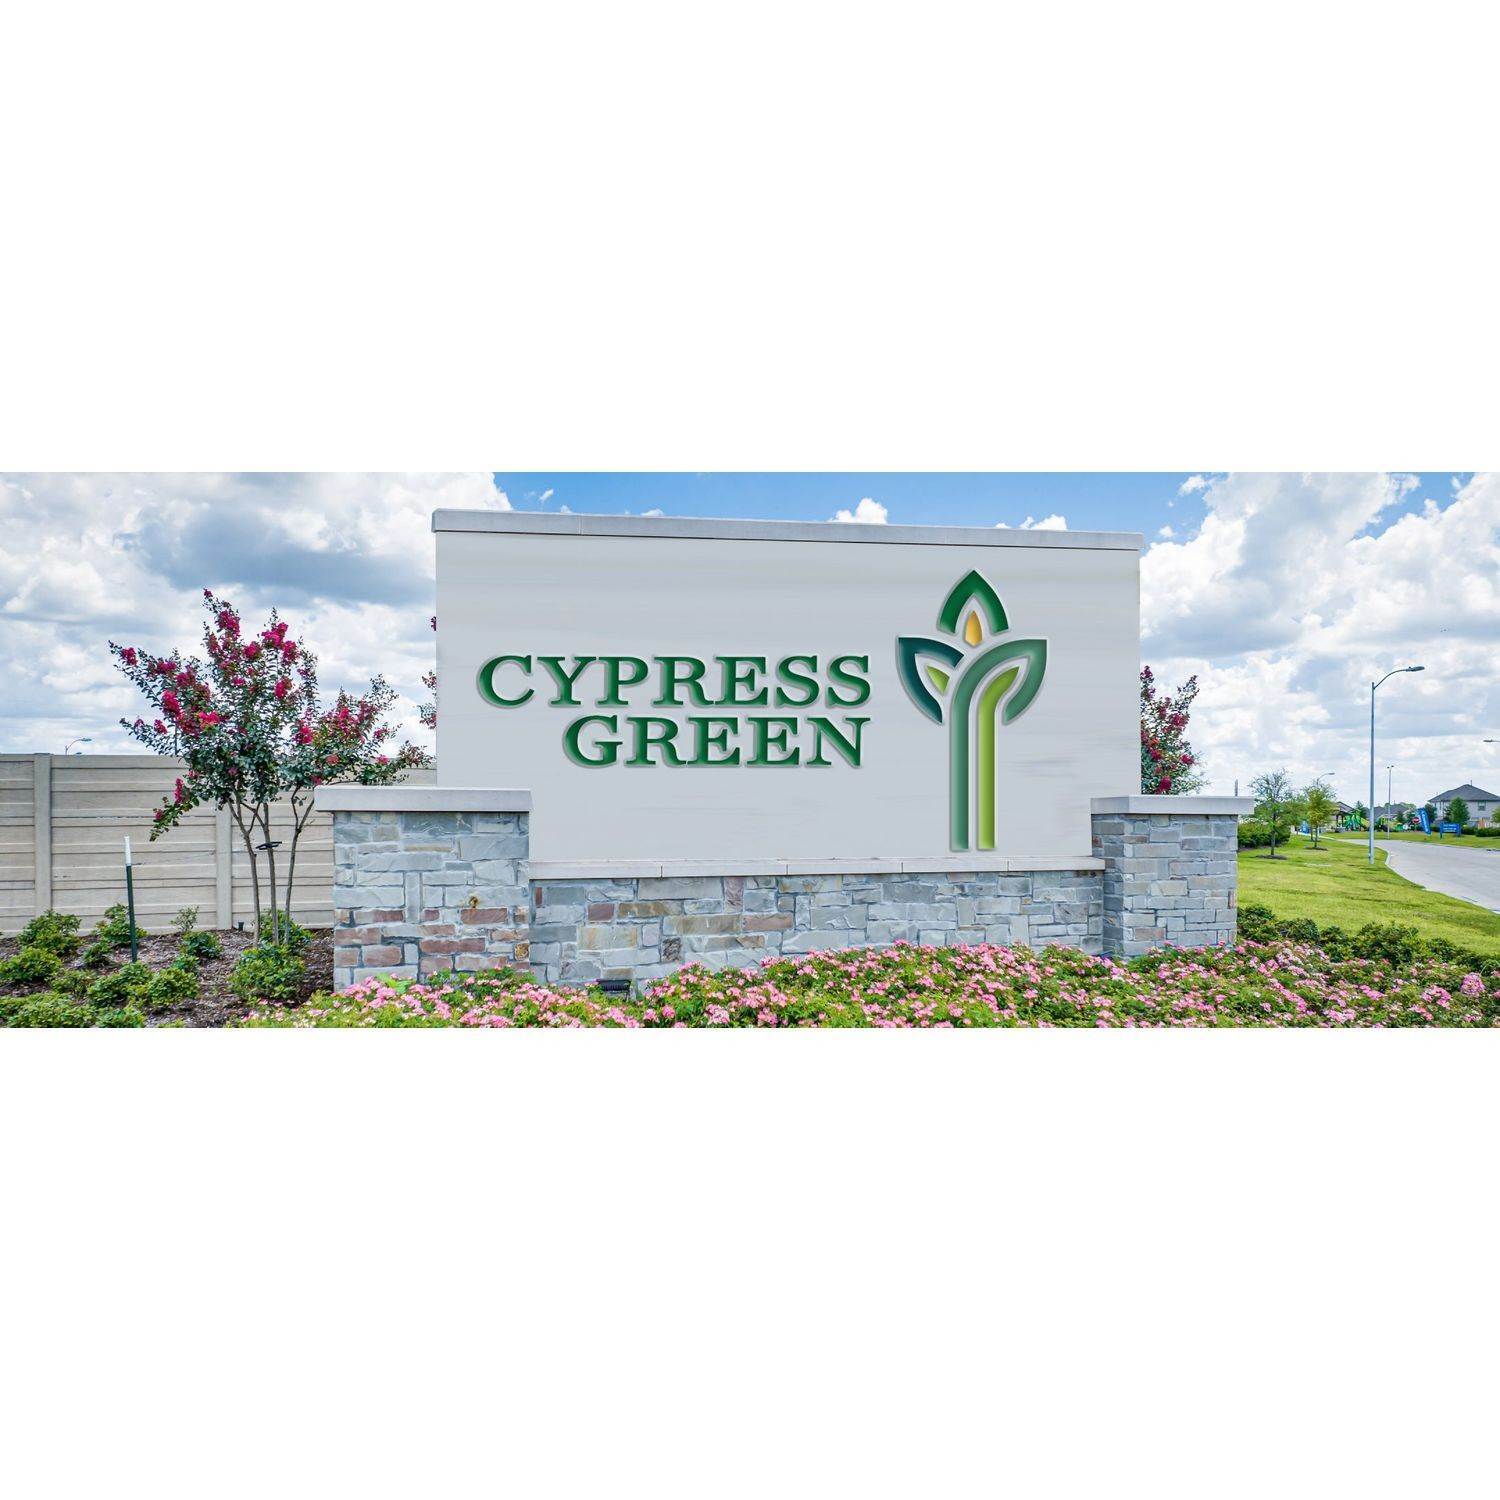 Cypress Green - Cottage IV Collection Gebäude bei 22106 Cortona Creek Lane, Hockley, TX 77447